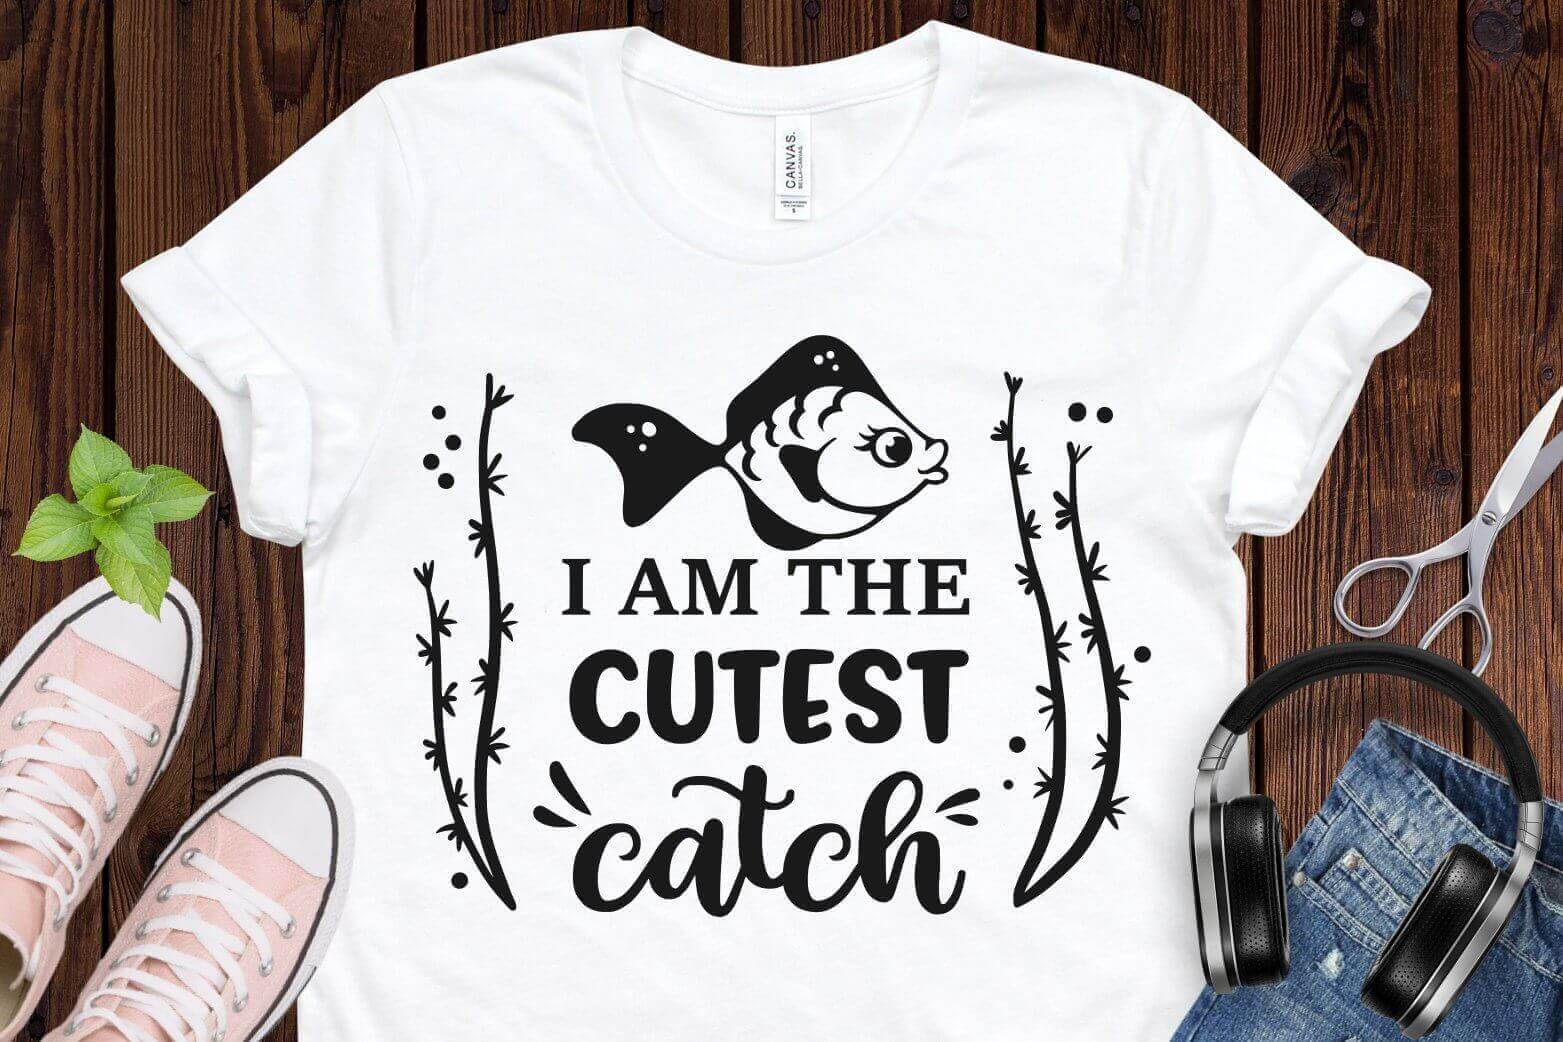 I am the Cutest Catch.